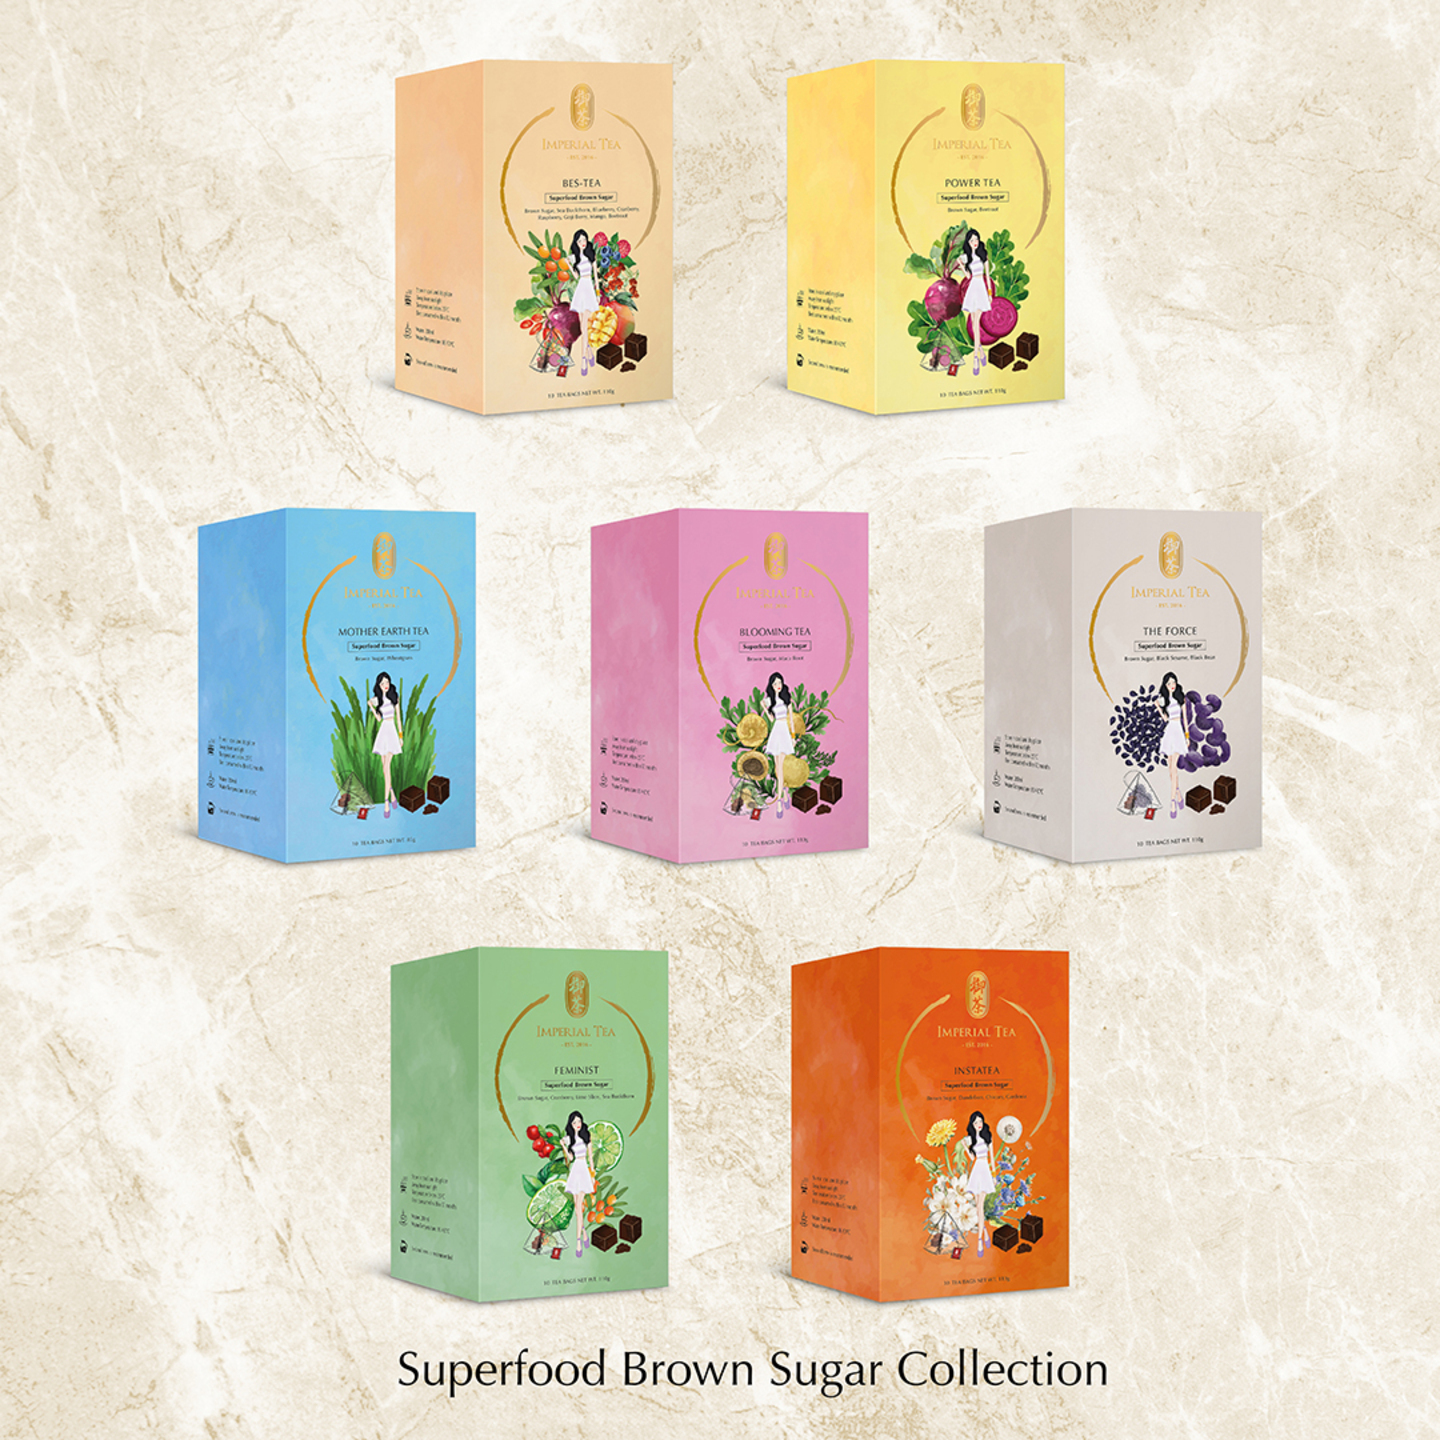 Imperial Tea 御茶 Superfood Brown Sugar Collection 超级食品红糖茶系列